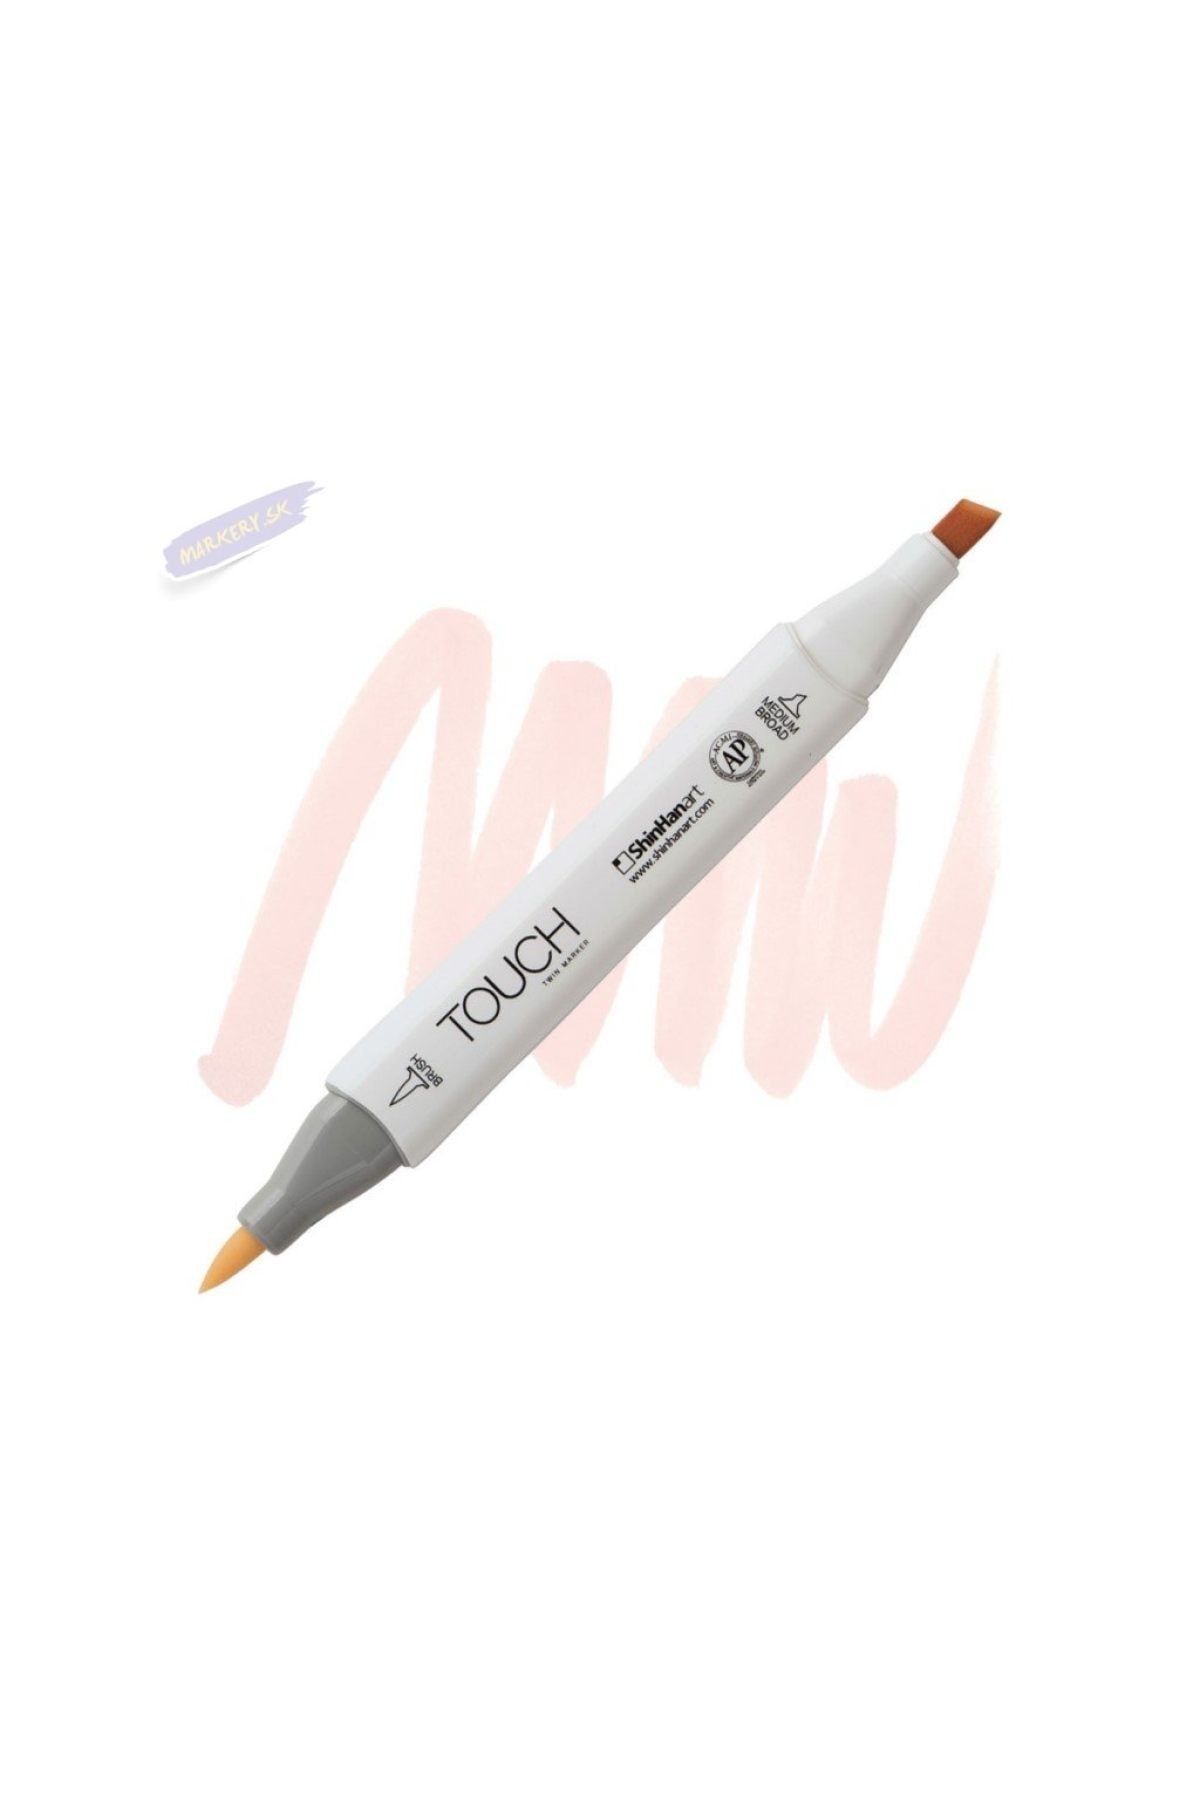 Shinhan Art Touch Twın Brush Pen : Çift Taraflı Marker : Yr27 Powder Pink